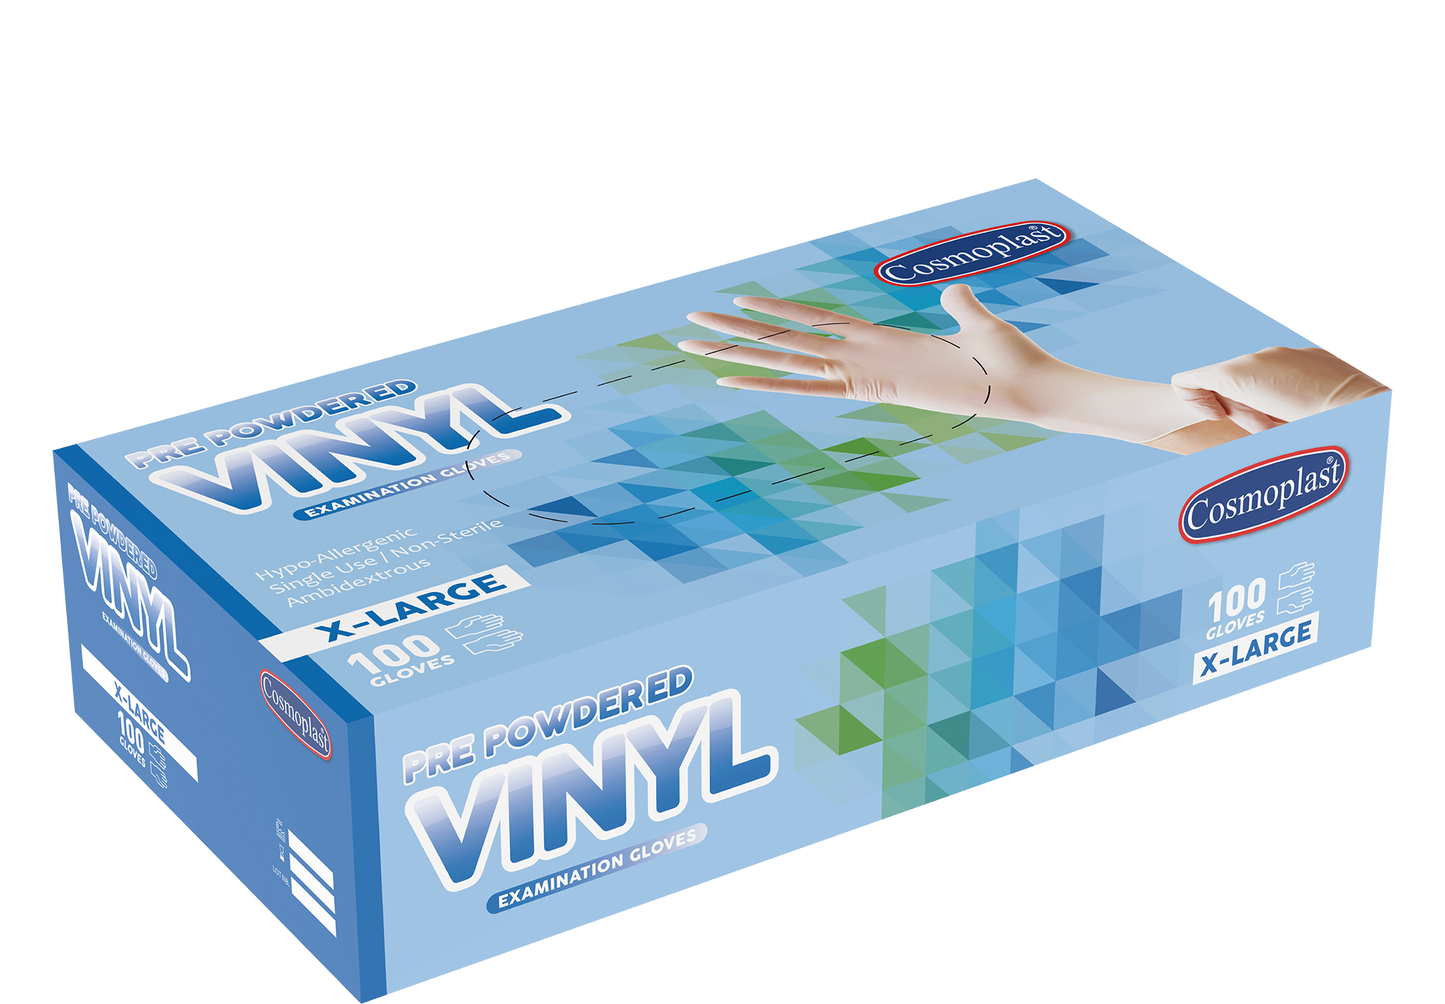 Cosmoplast Hygiene Clear Pre-powdered Vinyl Gloves XLarge 100 Pcs